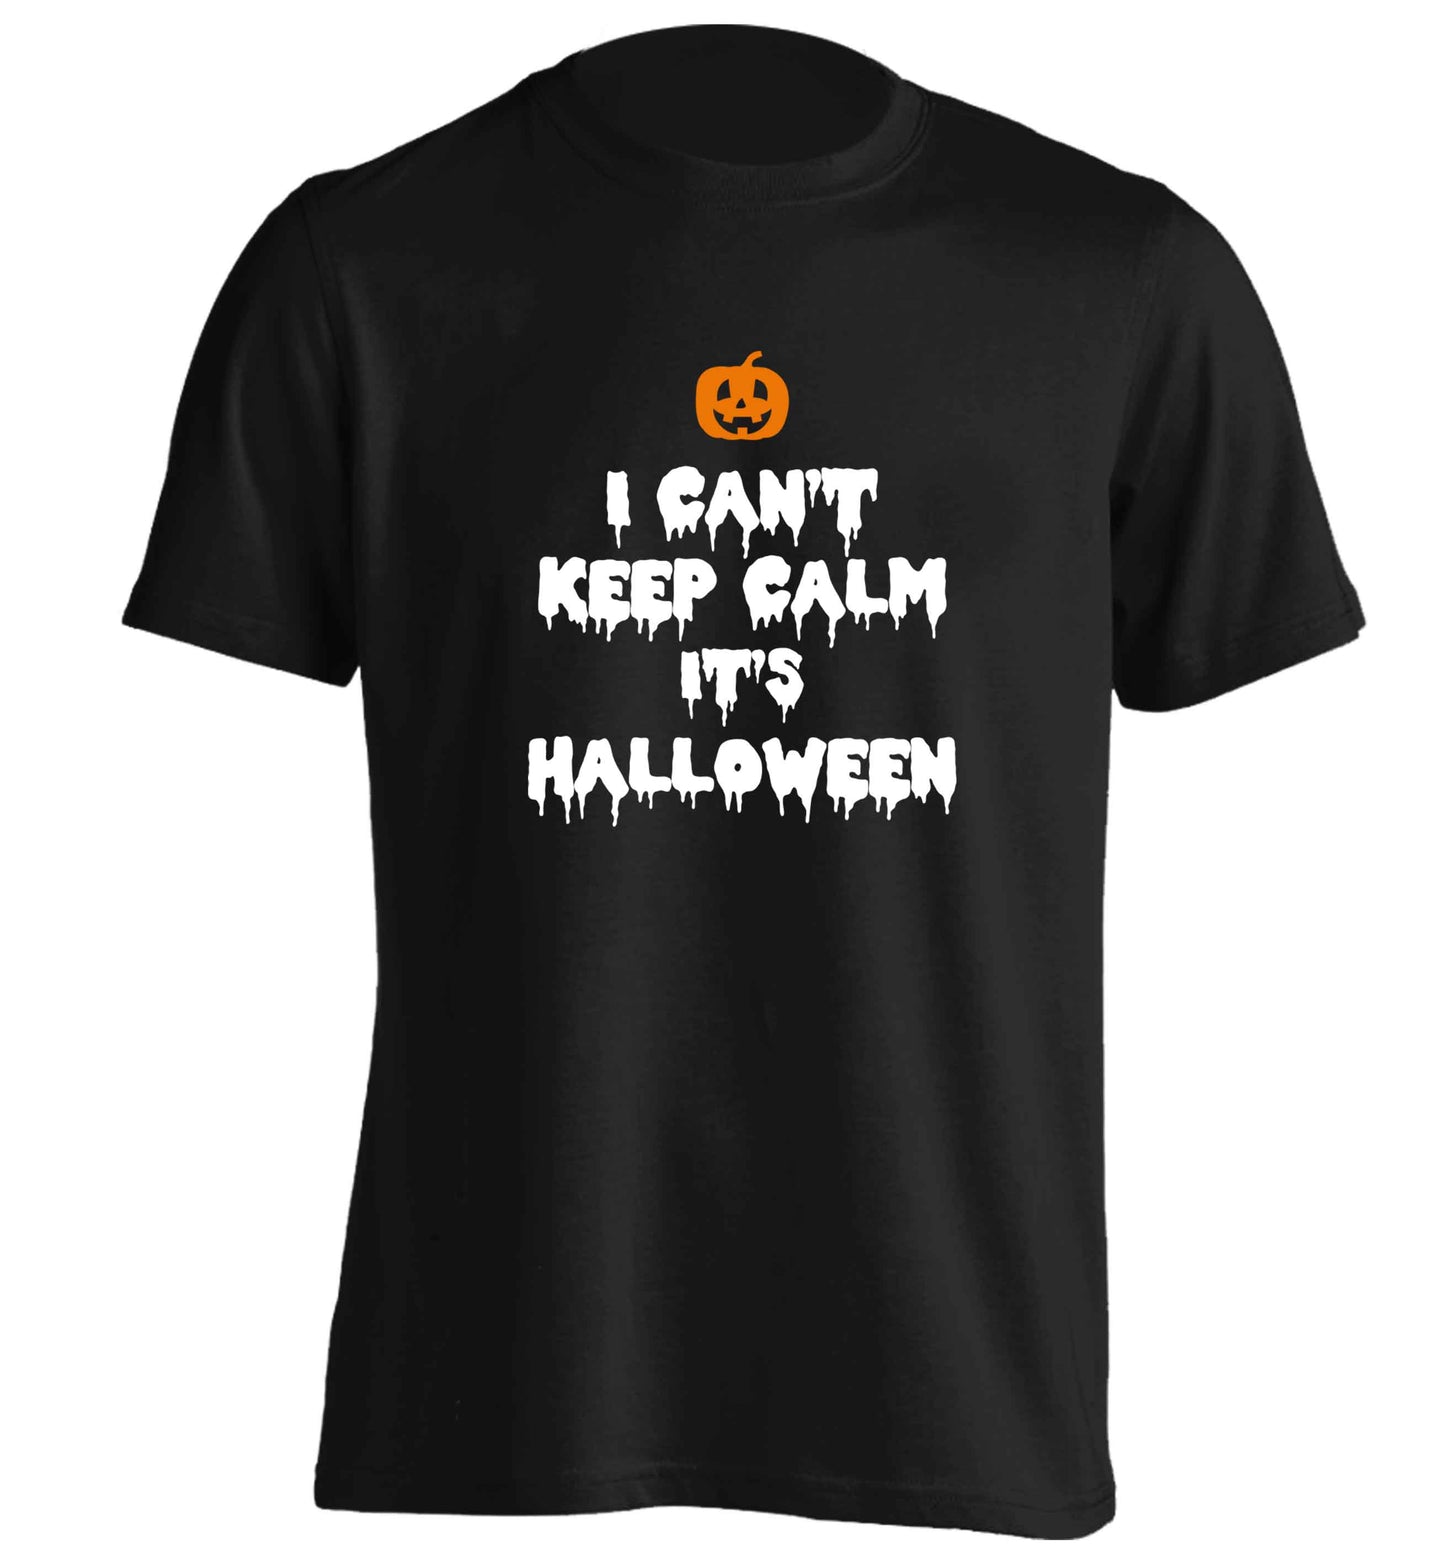 I can't keep calm it's halloween adults unisex black Tshirt 2XL